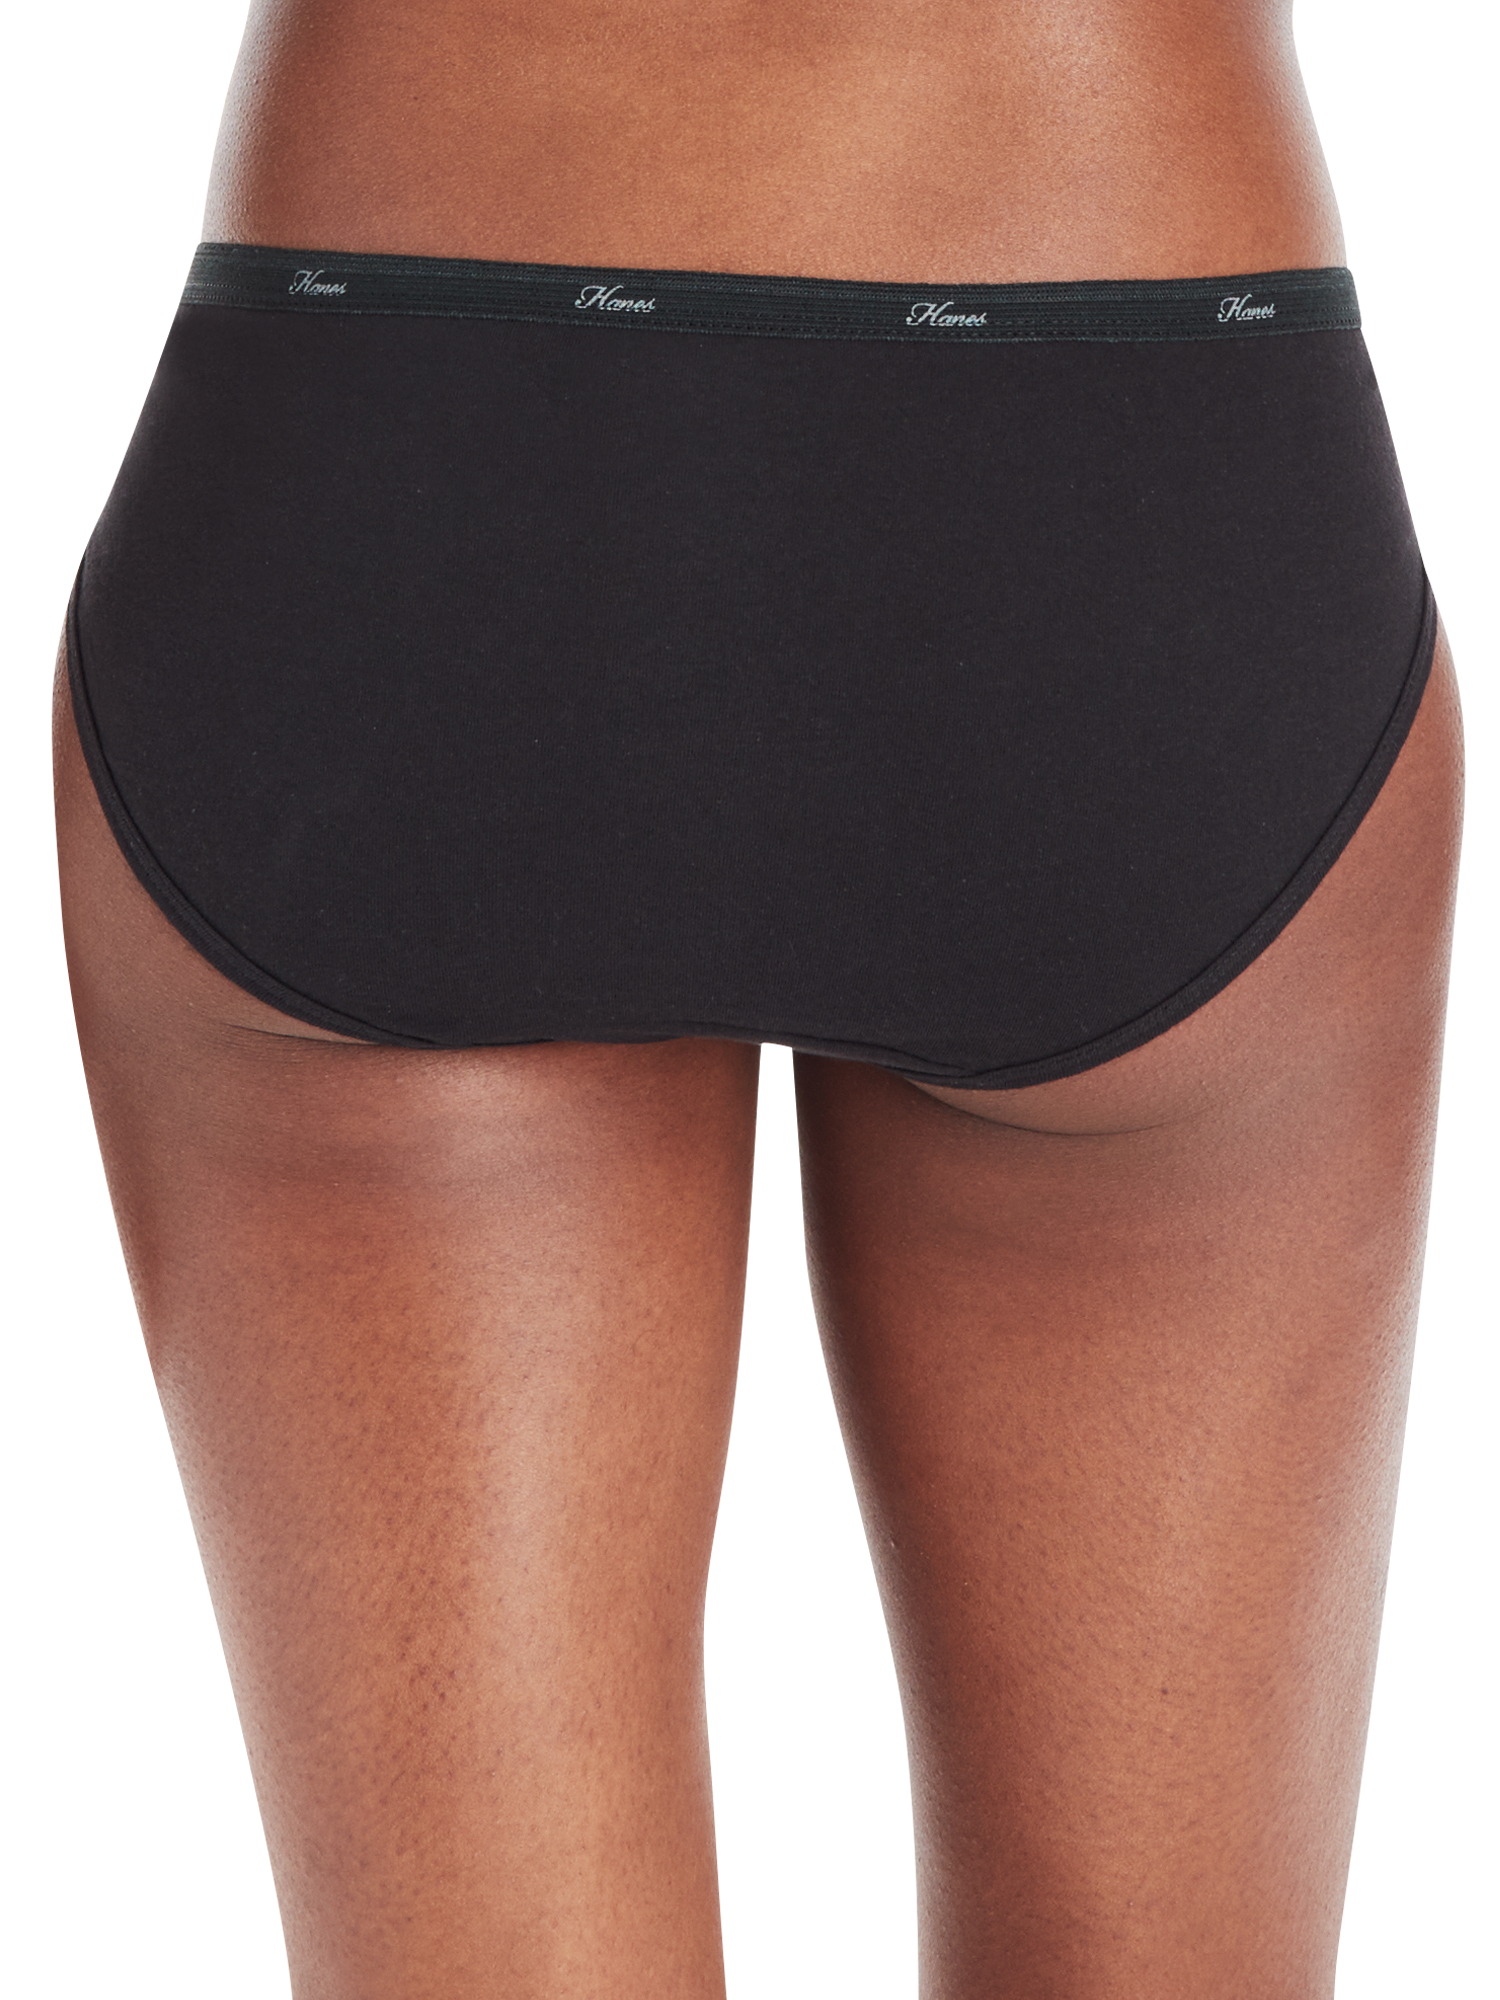 Hanes Women's Cotton Bikini Underwear, 6-Pack - image 4 of 7